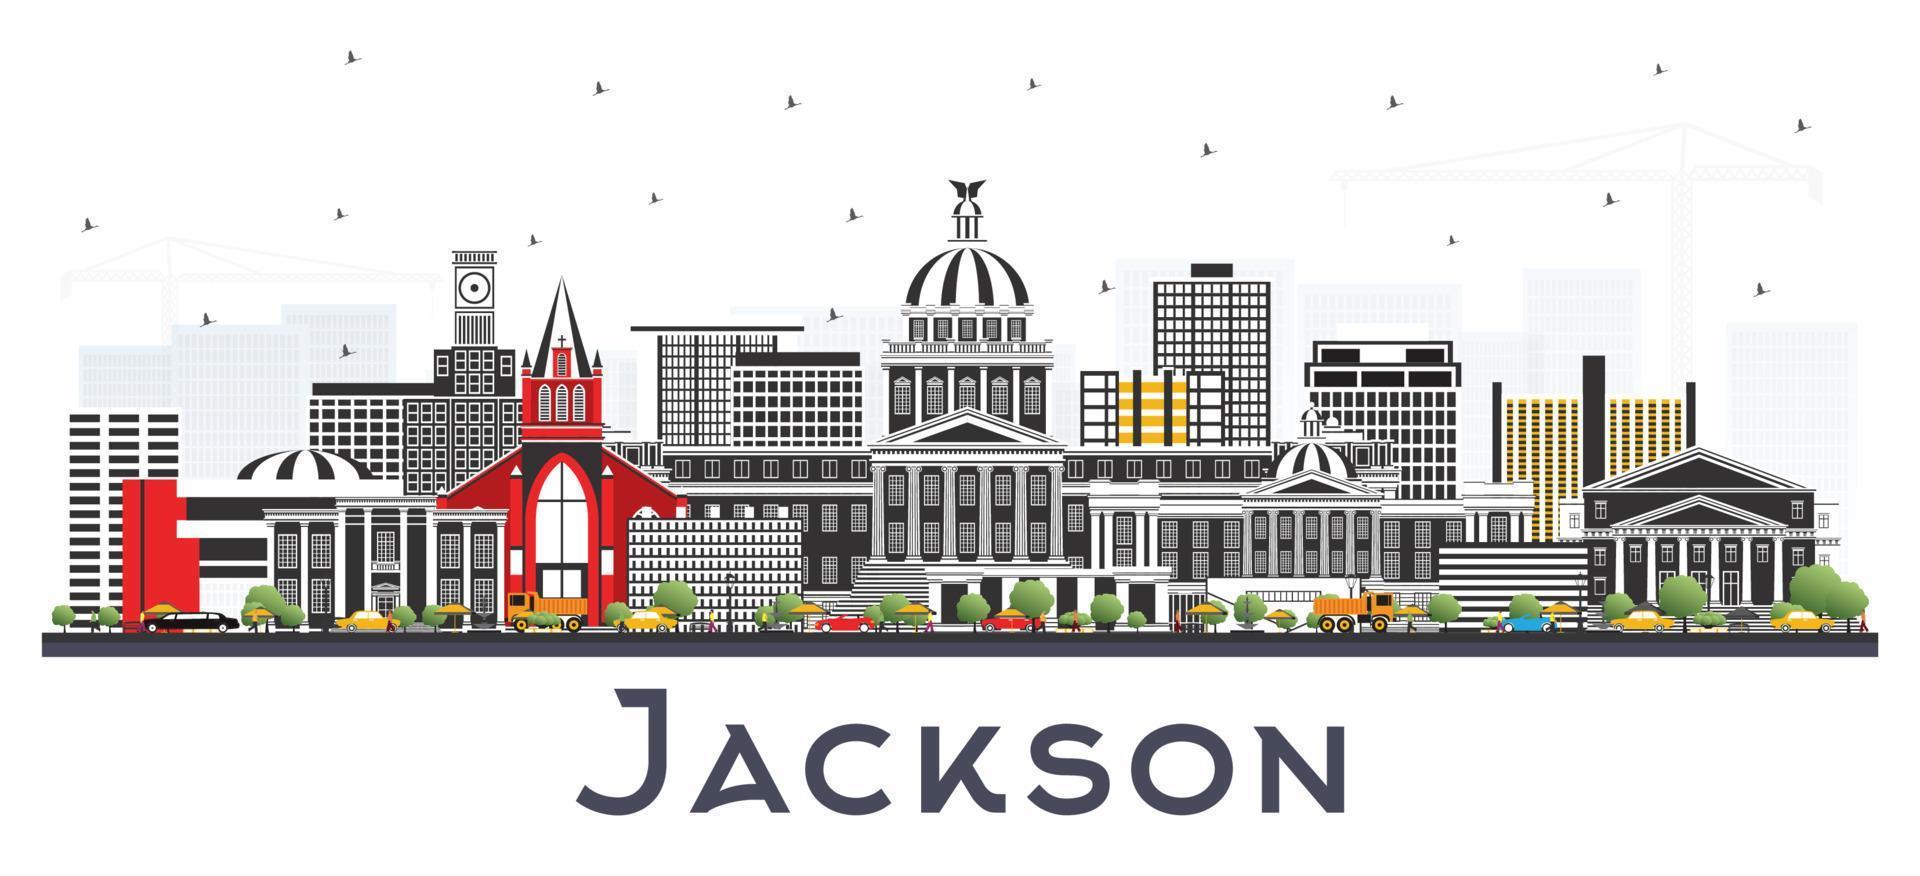 Jackson mississippi stad horisont med grå byggnader isolerat på vit. vektor